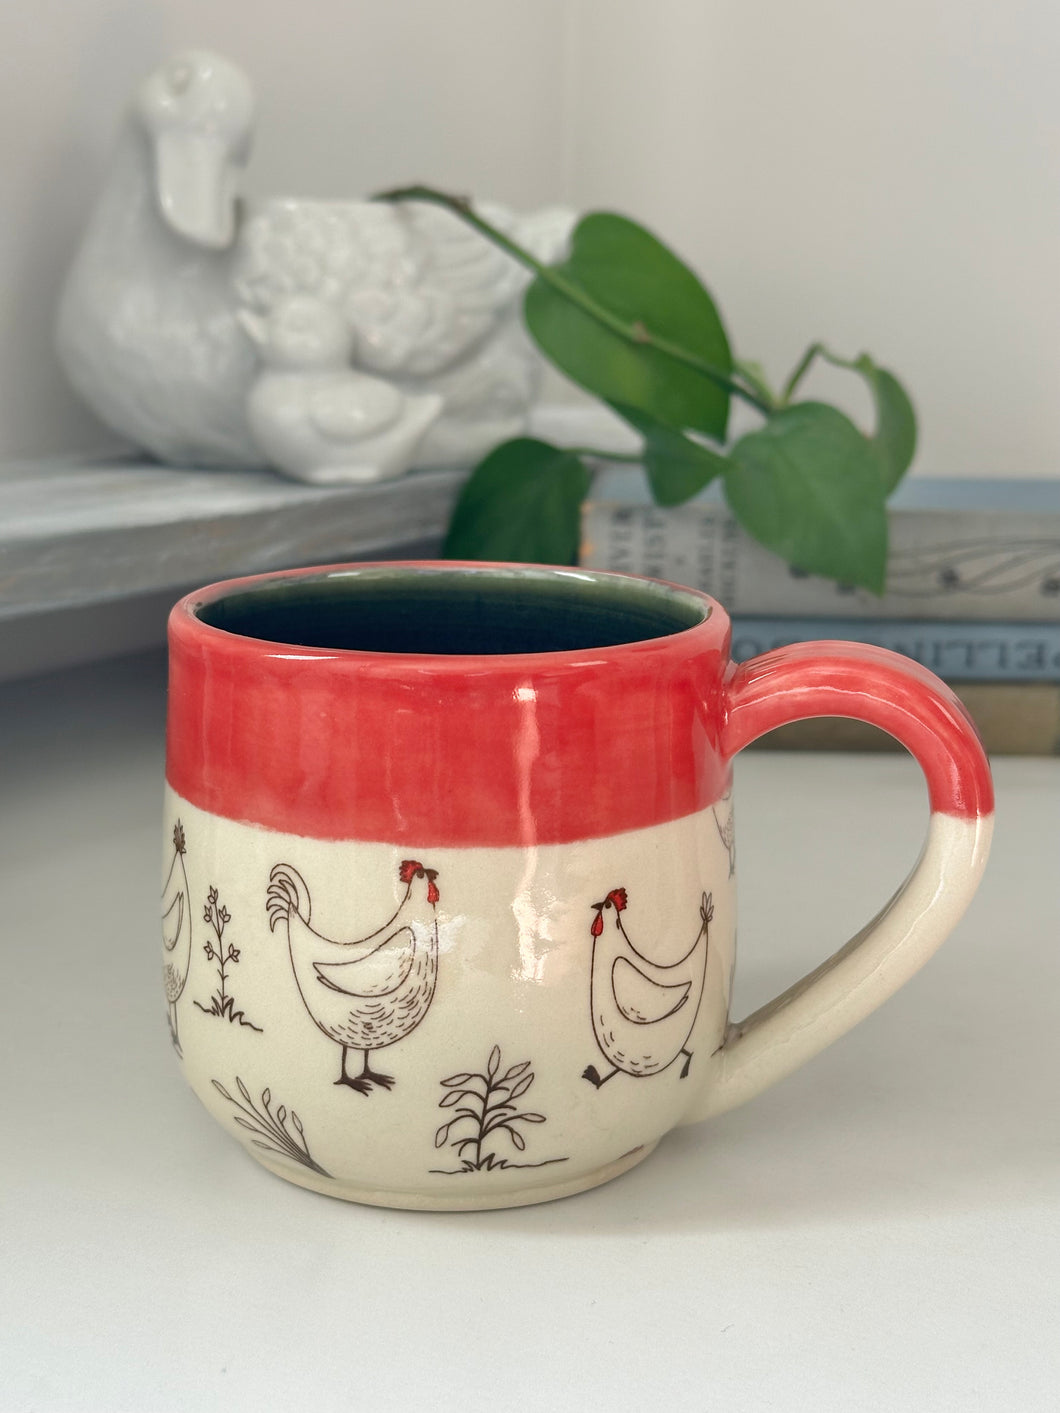 #004 - 14 oz. white Chicken mug with red rim and dark blue inside